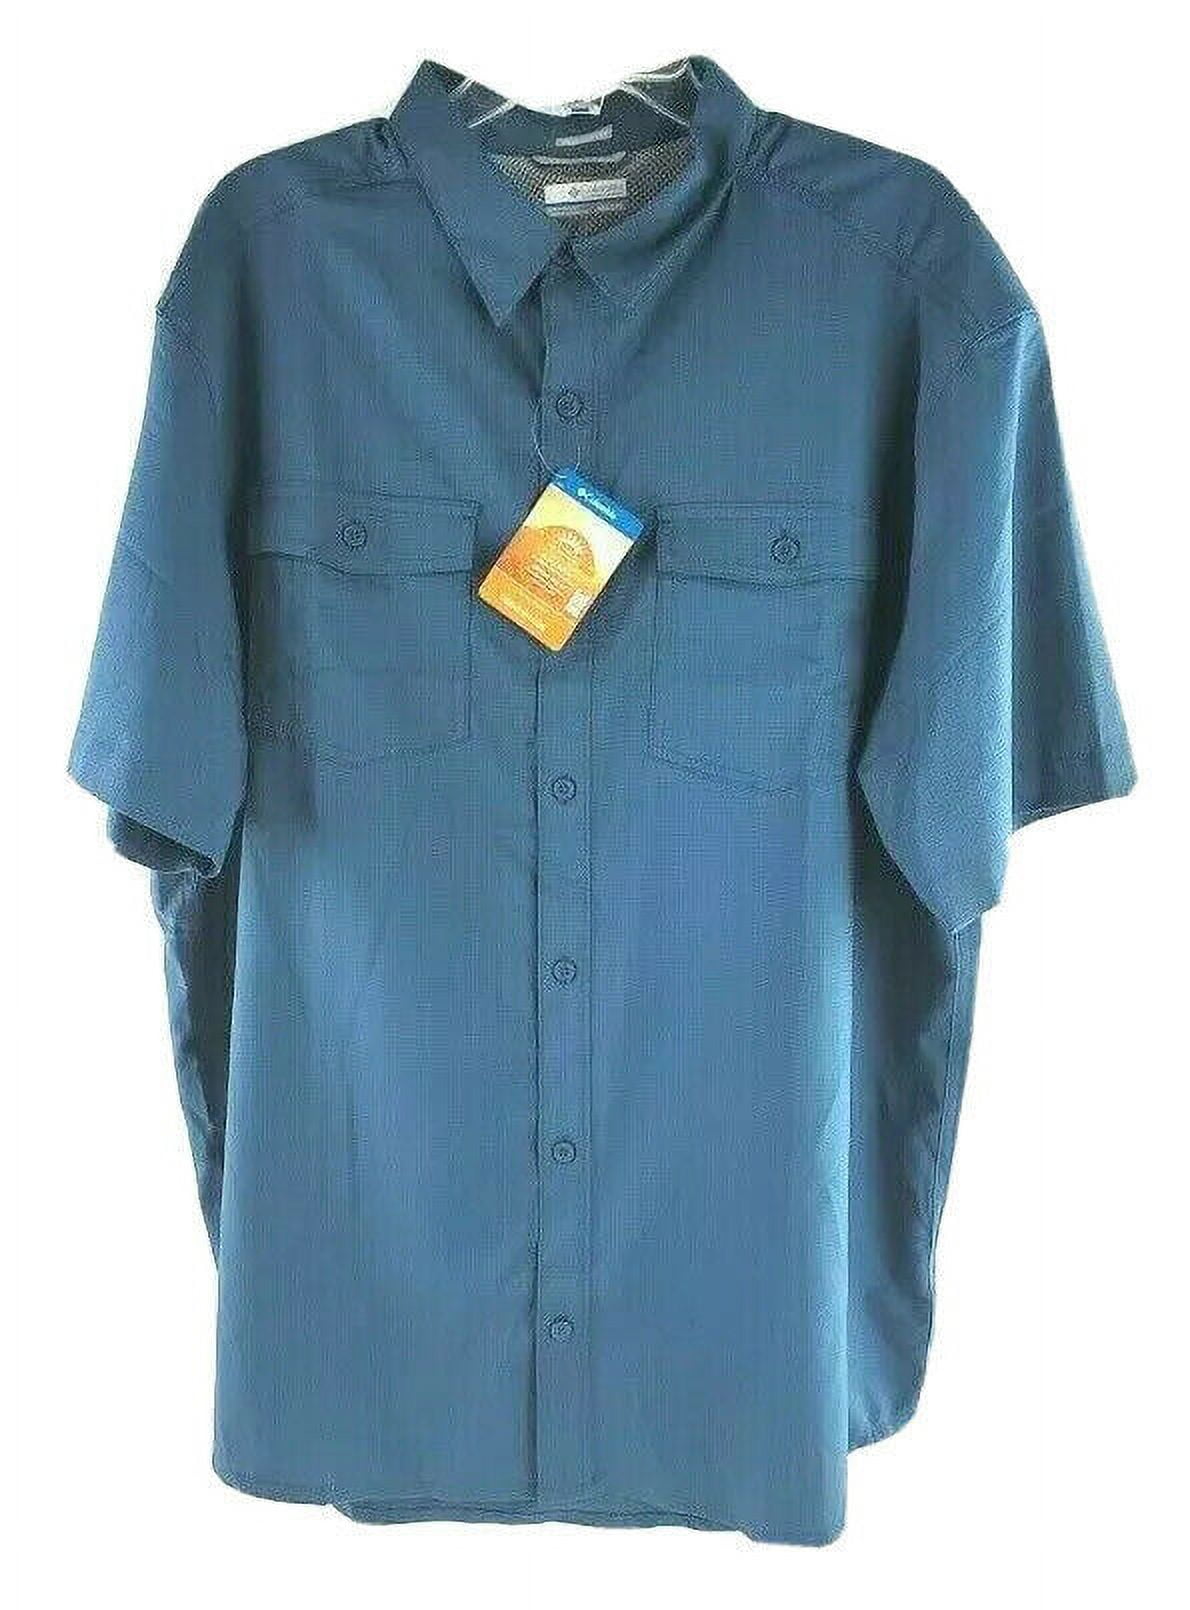 Columbia Men's Omni-Shade SPF 40 Short Sleeve Fishing Shirt, Blue